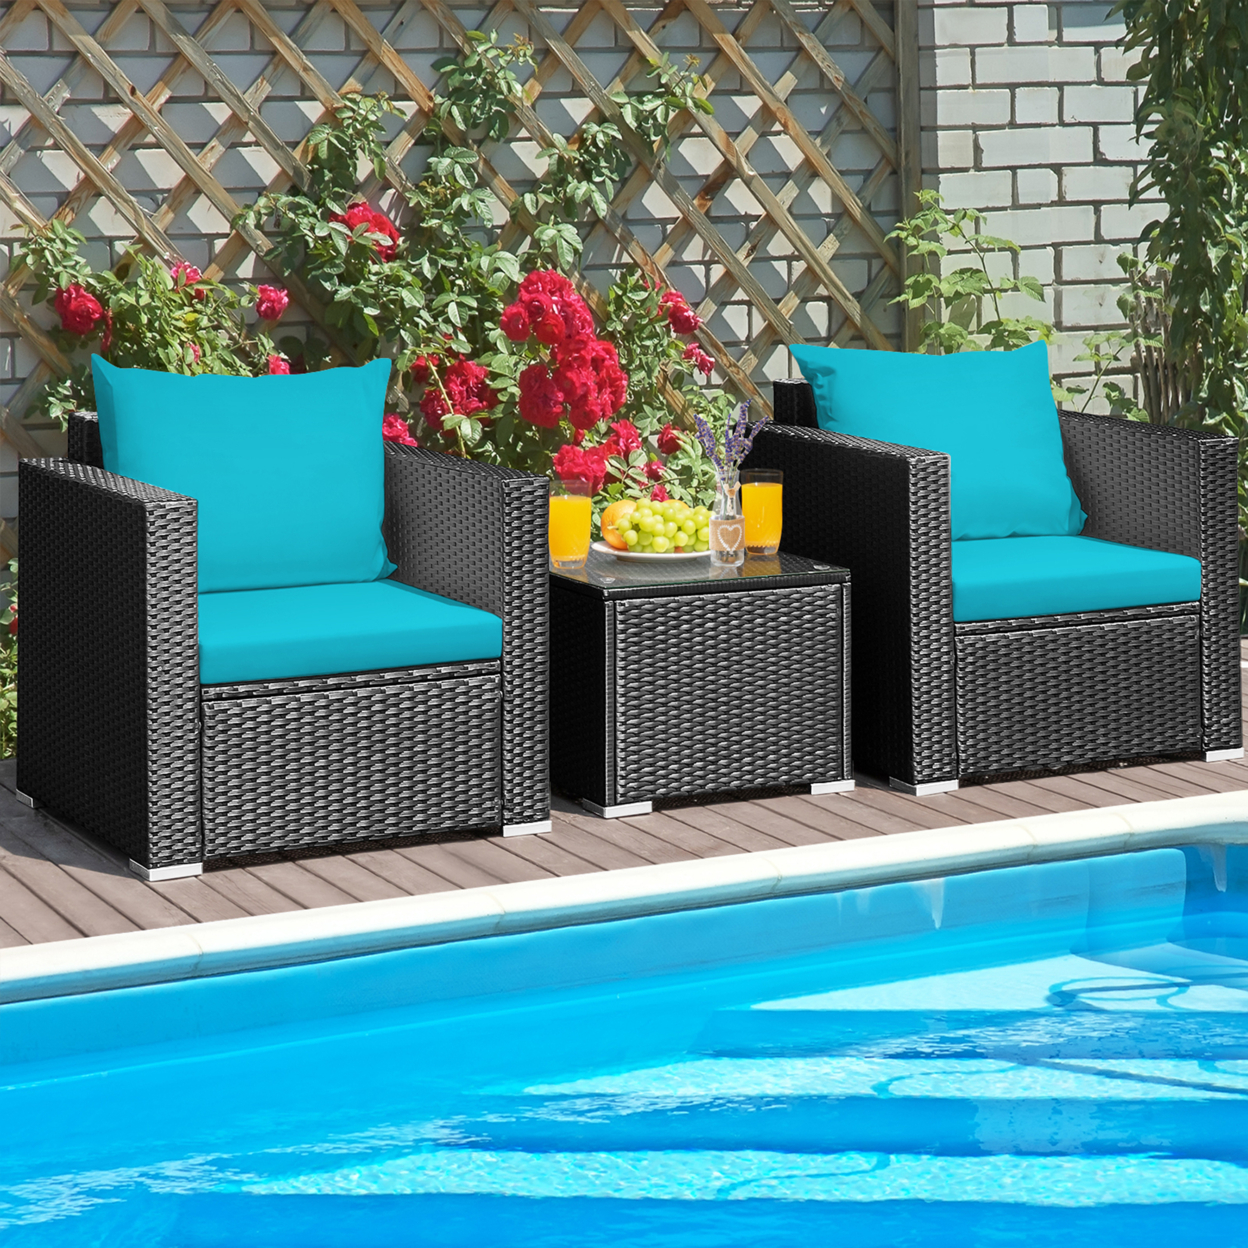 3PCS Rattan Patio Conversation Furniture Set Outdoor W/ Turquoise Cushions